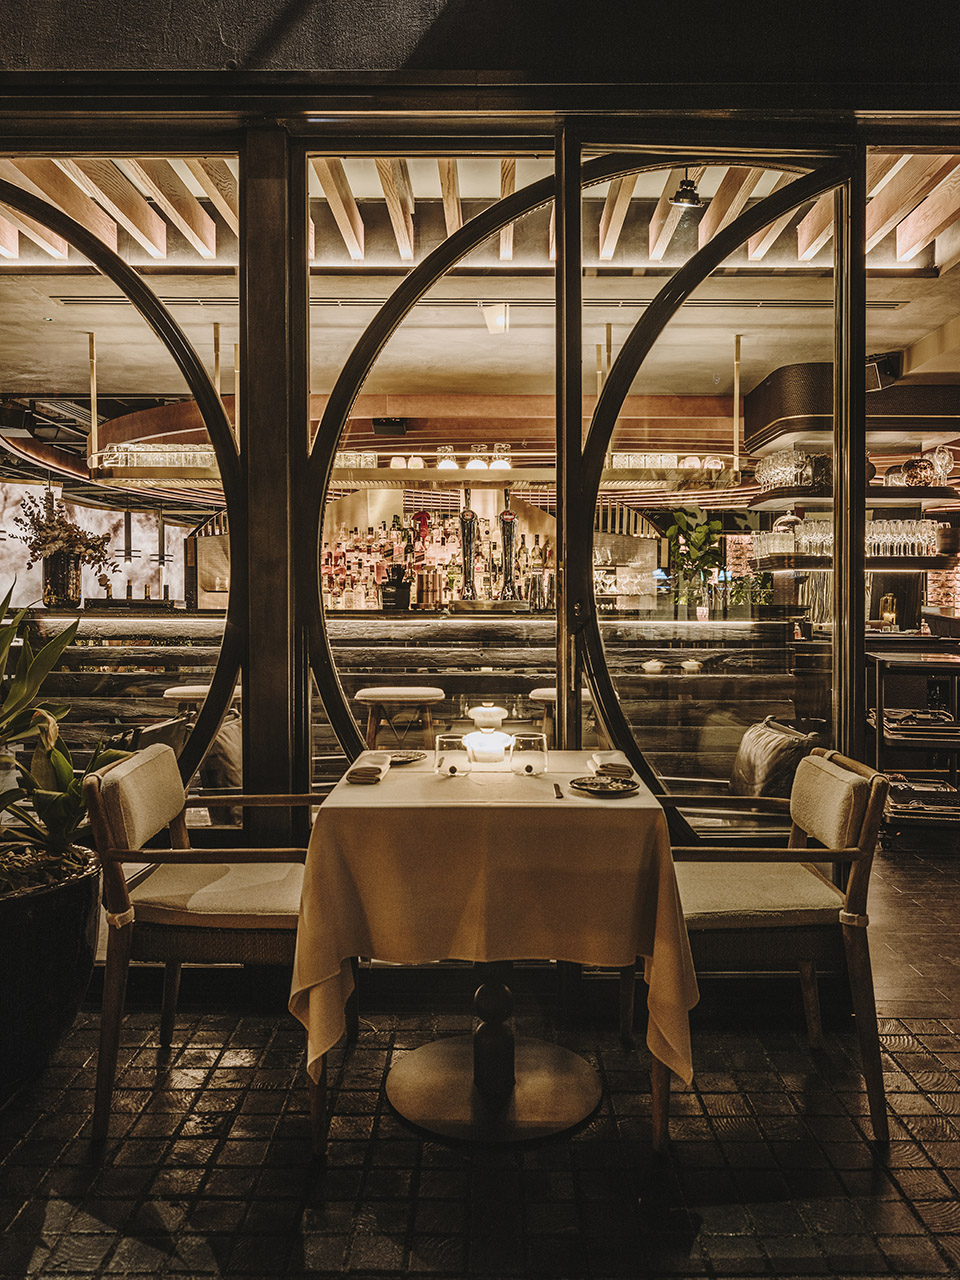 Leña餐厅，西班牙/木头、石头和炭火，提取最原始的烹饪精髓-66